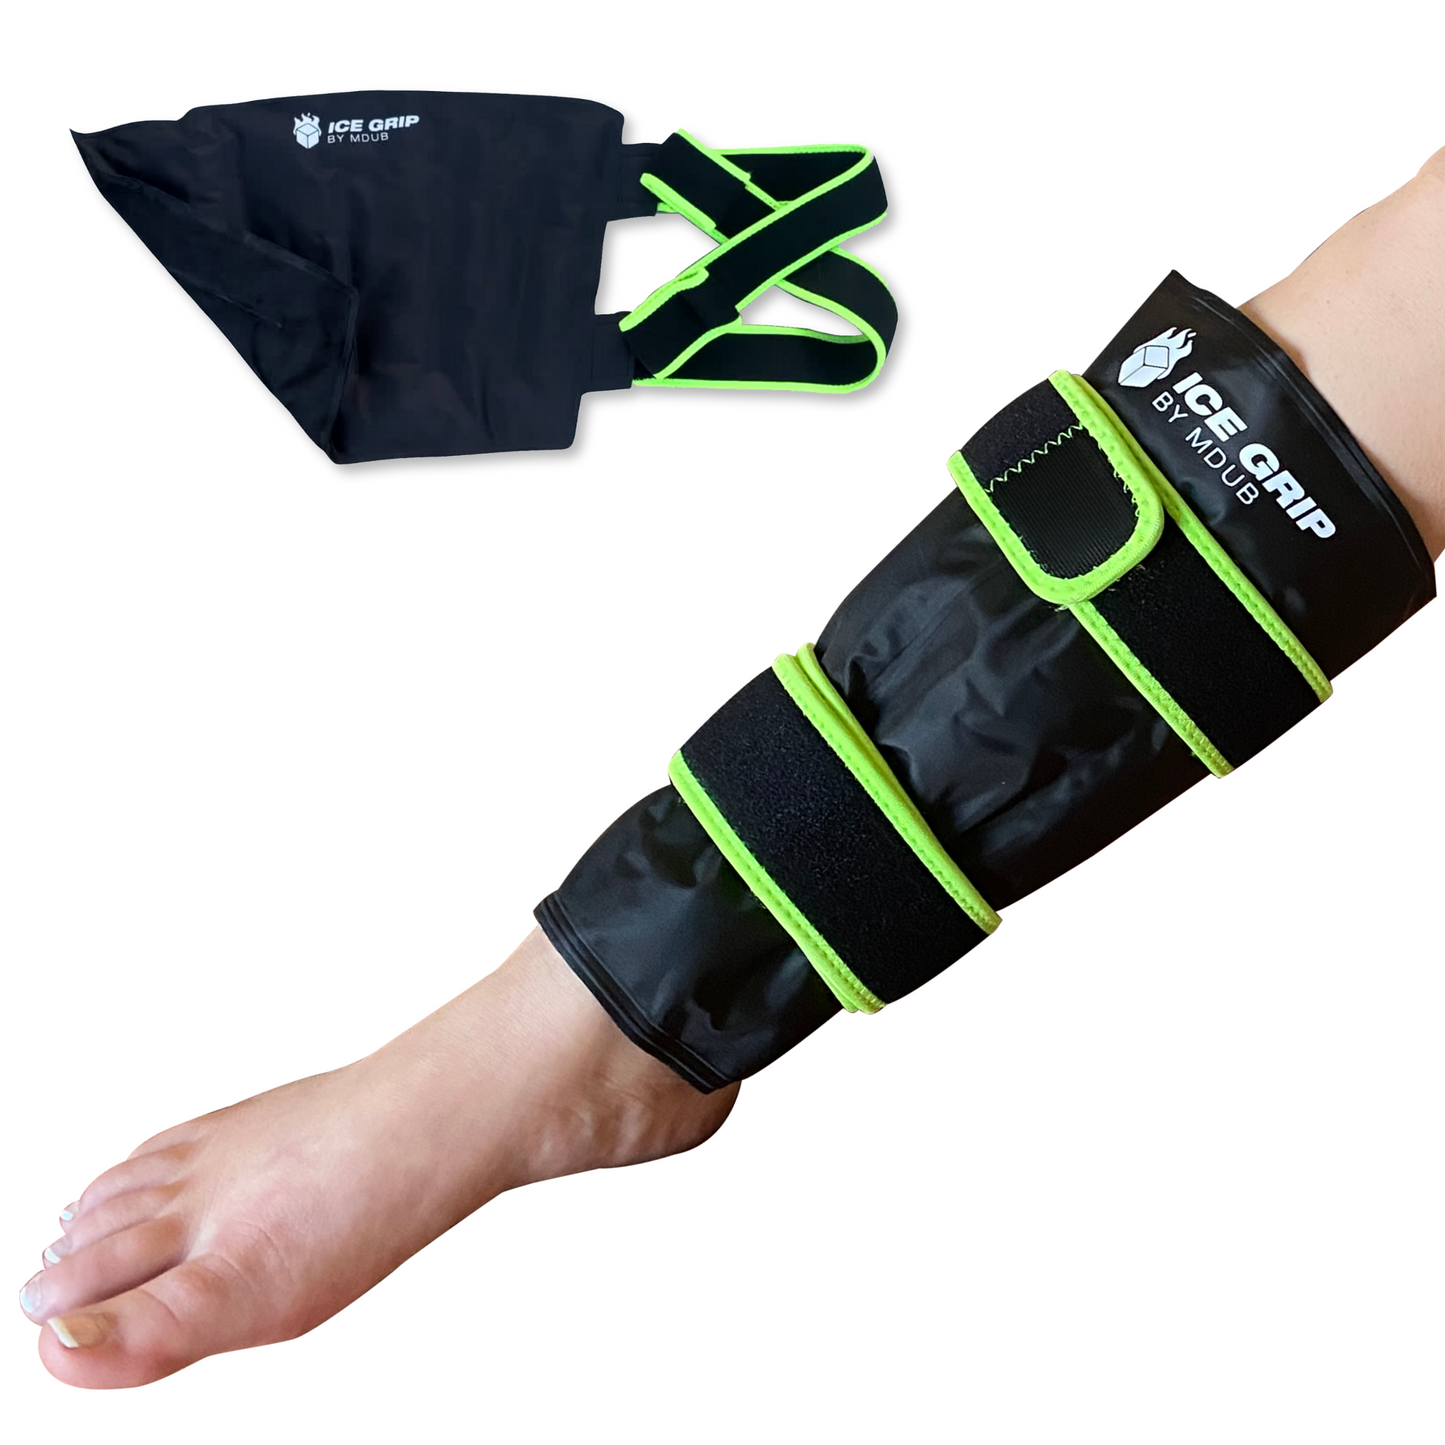 Ice Grip - Shin & Calf Ice Grip Wrap, Shin Brace, Calf Brace, Ankle Brace